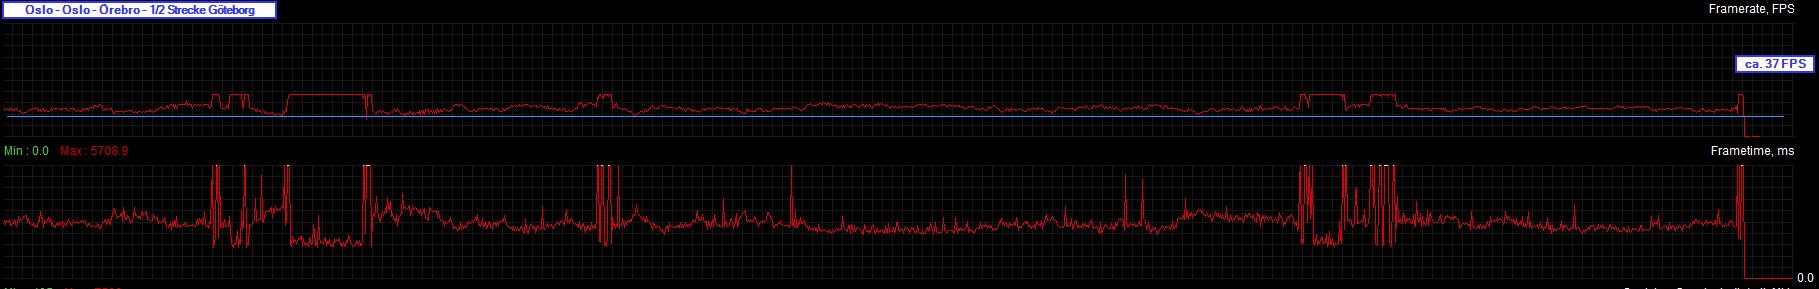 AB FPS - ETS2 VR 8Kx normal SteamVR-mode PP SteamVRini-optimiert - 5600X 2080 Ti - 201219.jpg